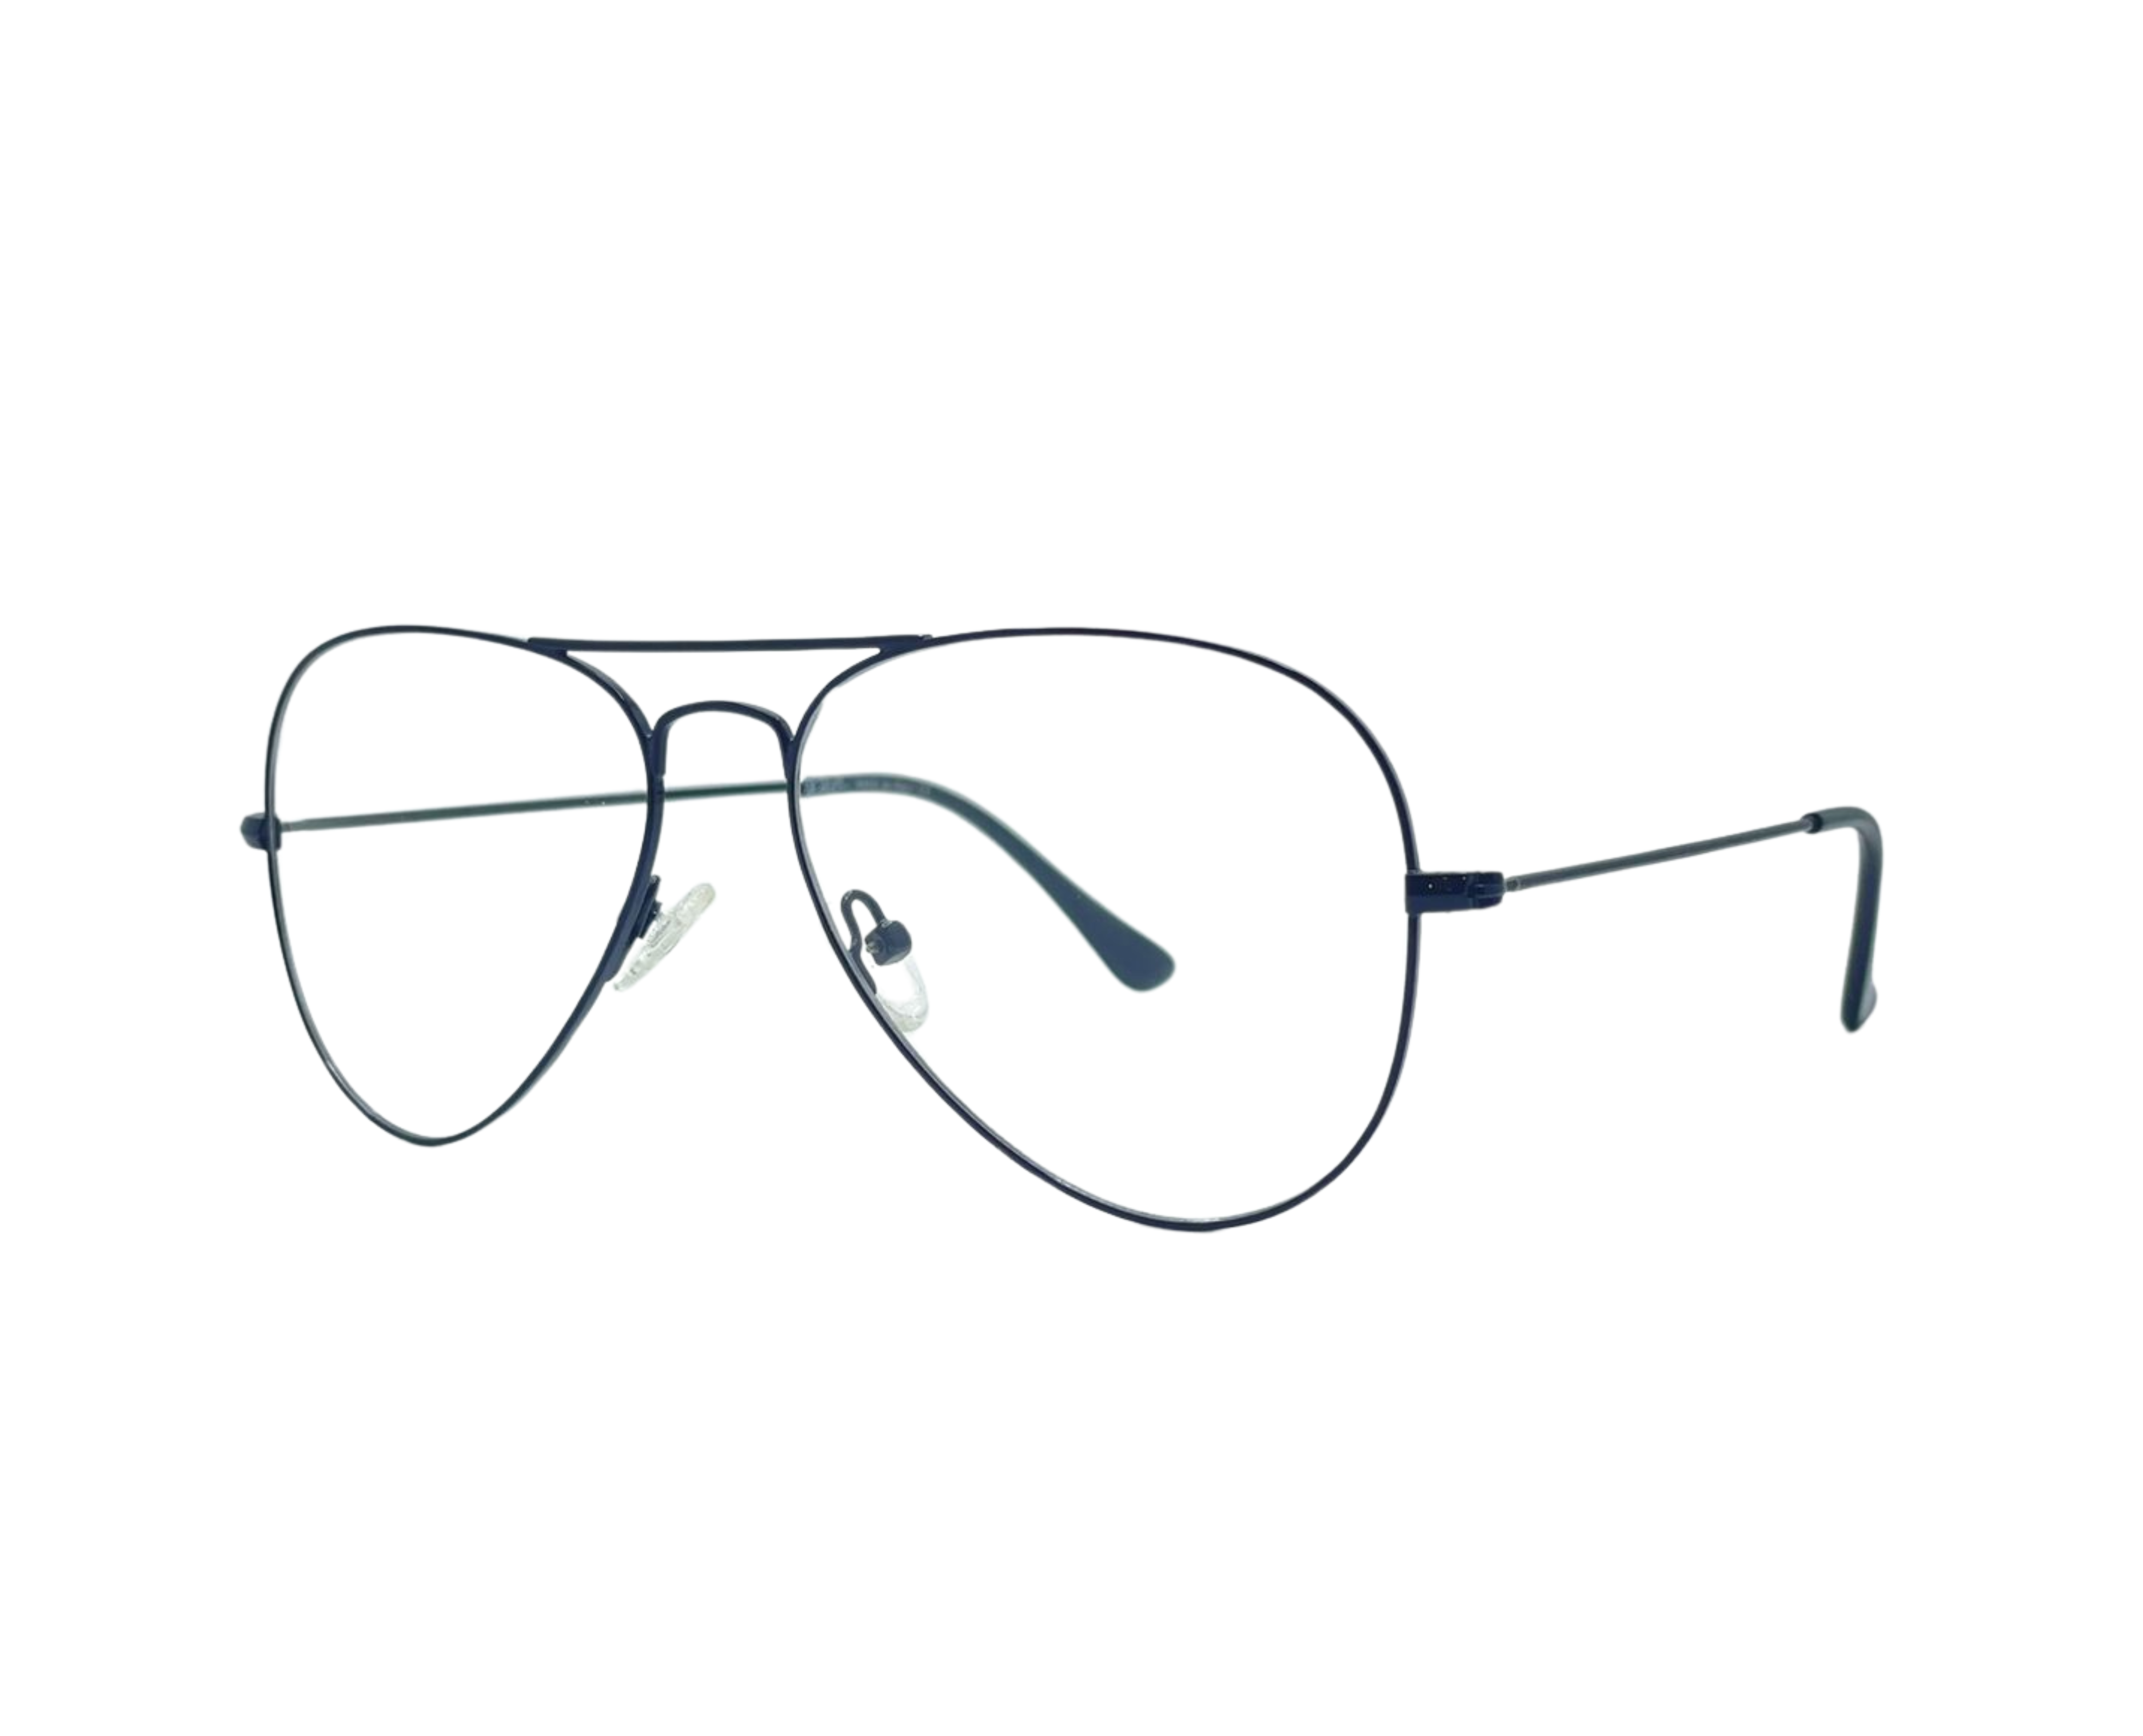 NS Deluxe - 3025 - Black - Eyeglasses